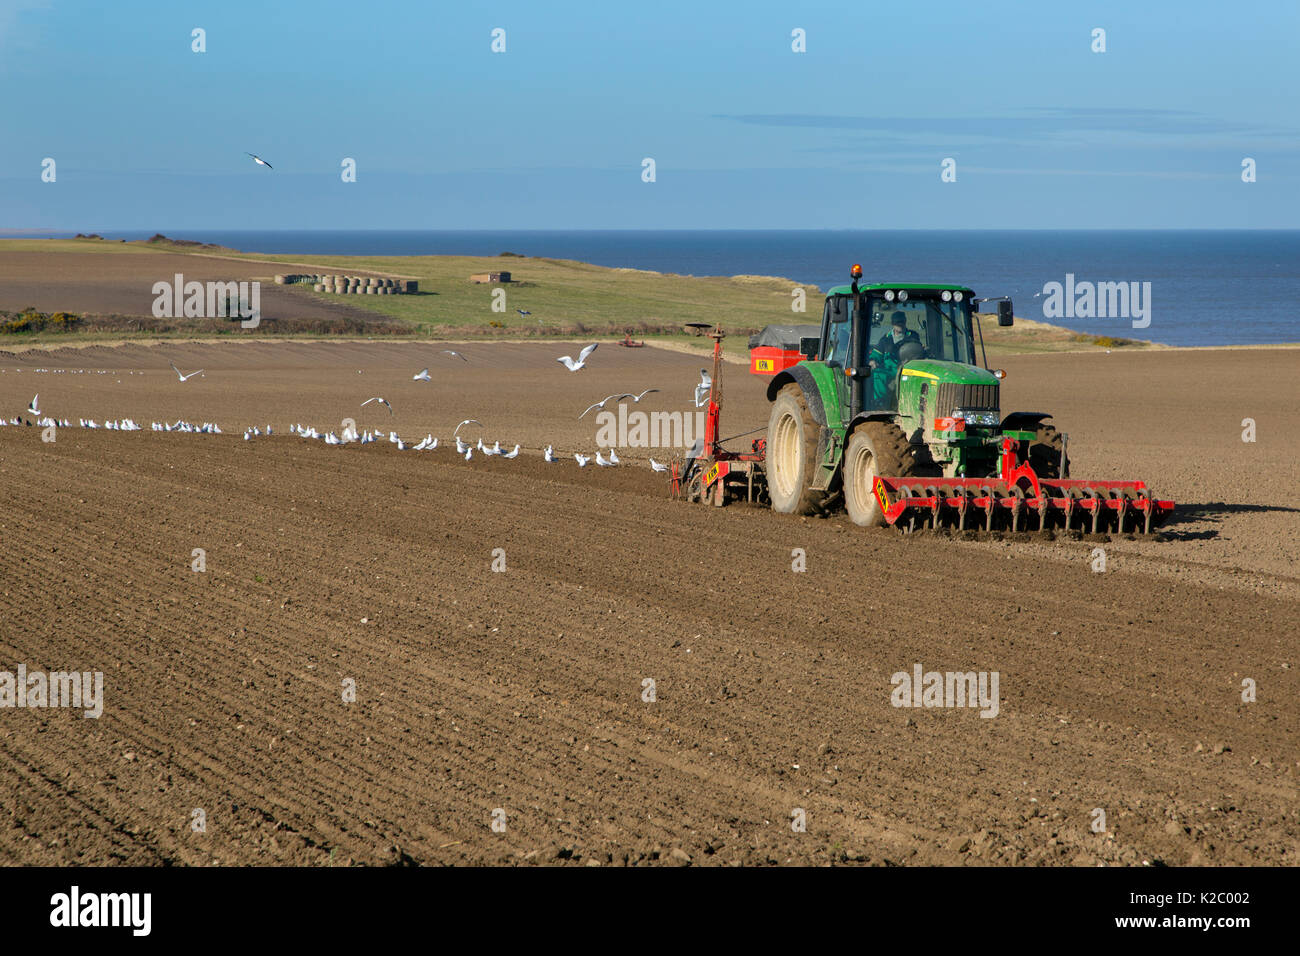 Tractor drilling barley at Weybourne, Norfolk, England, UK. February 2015. Stock Photo